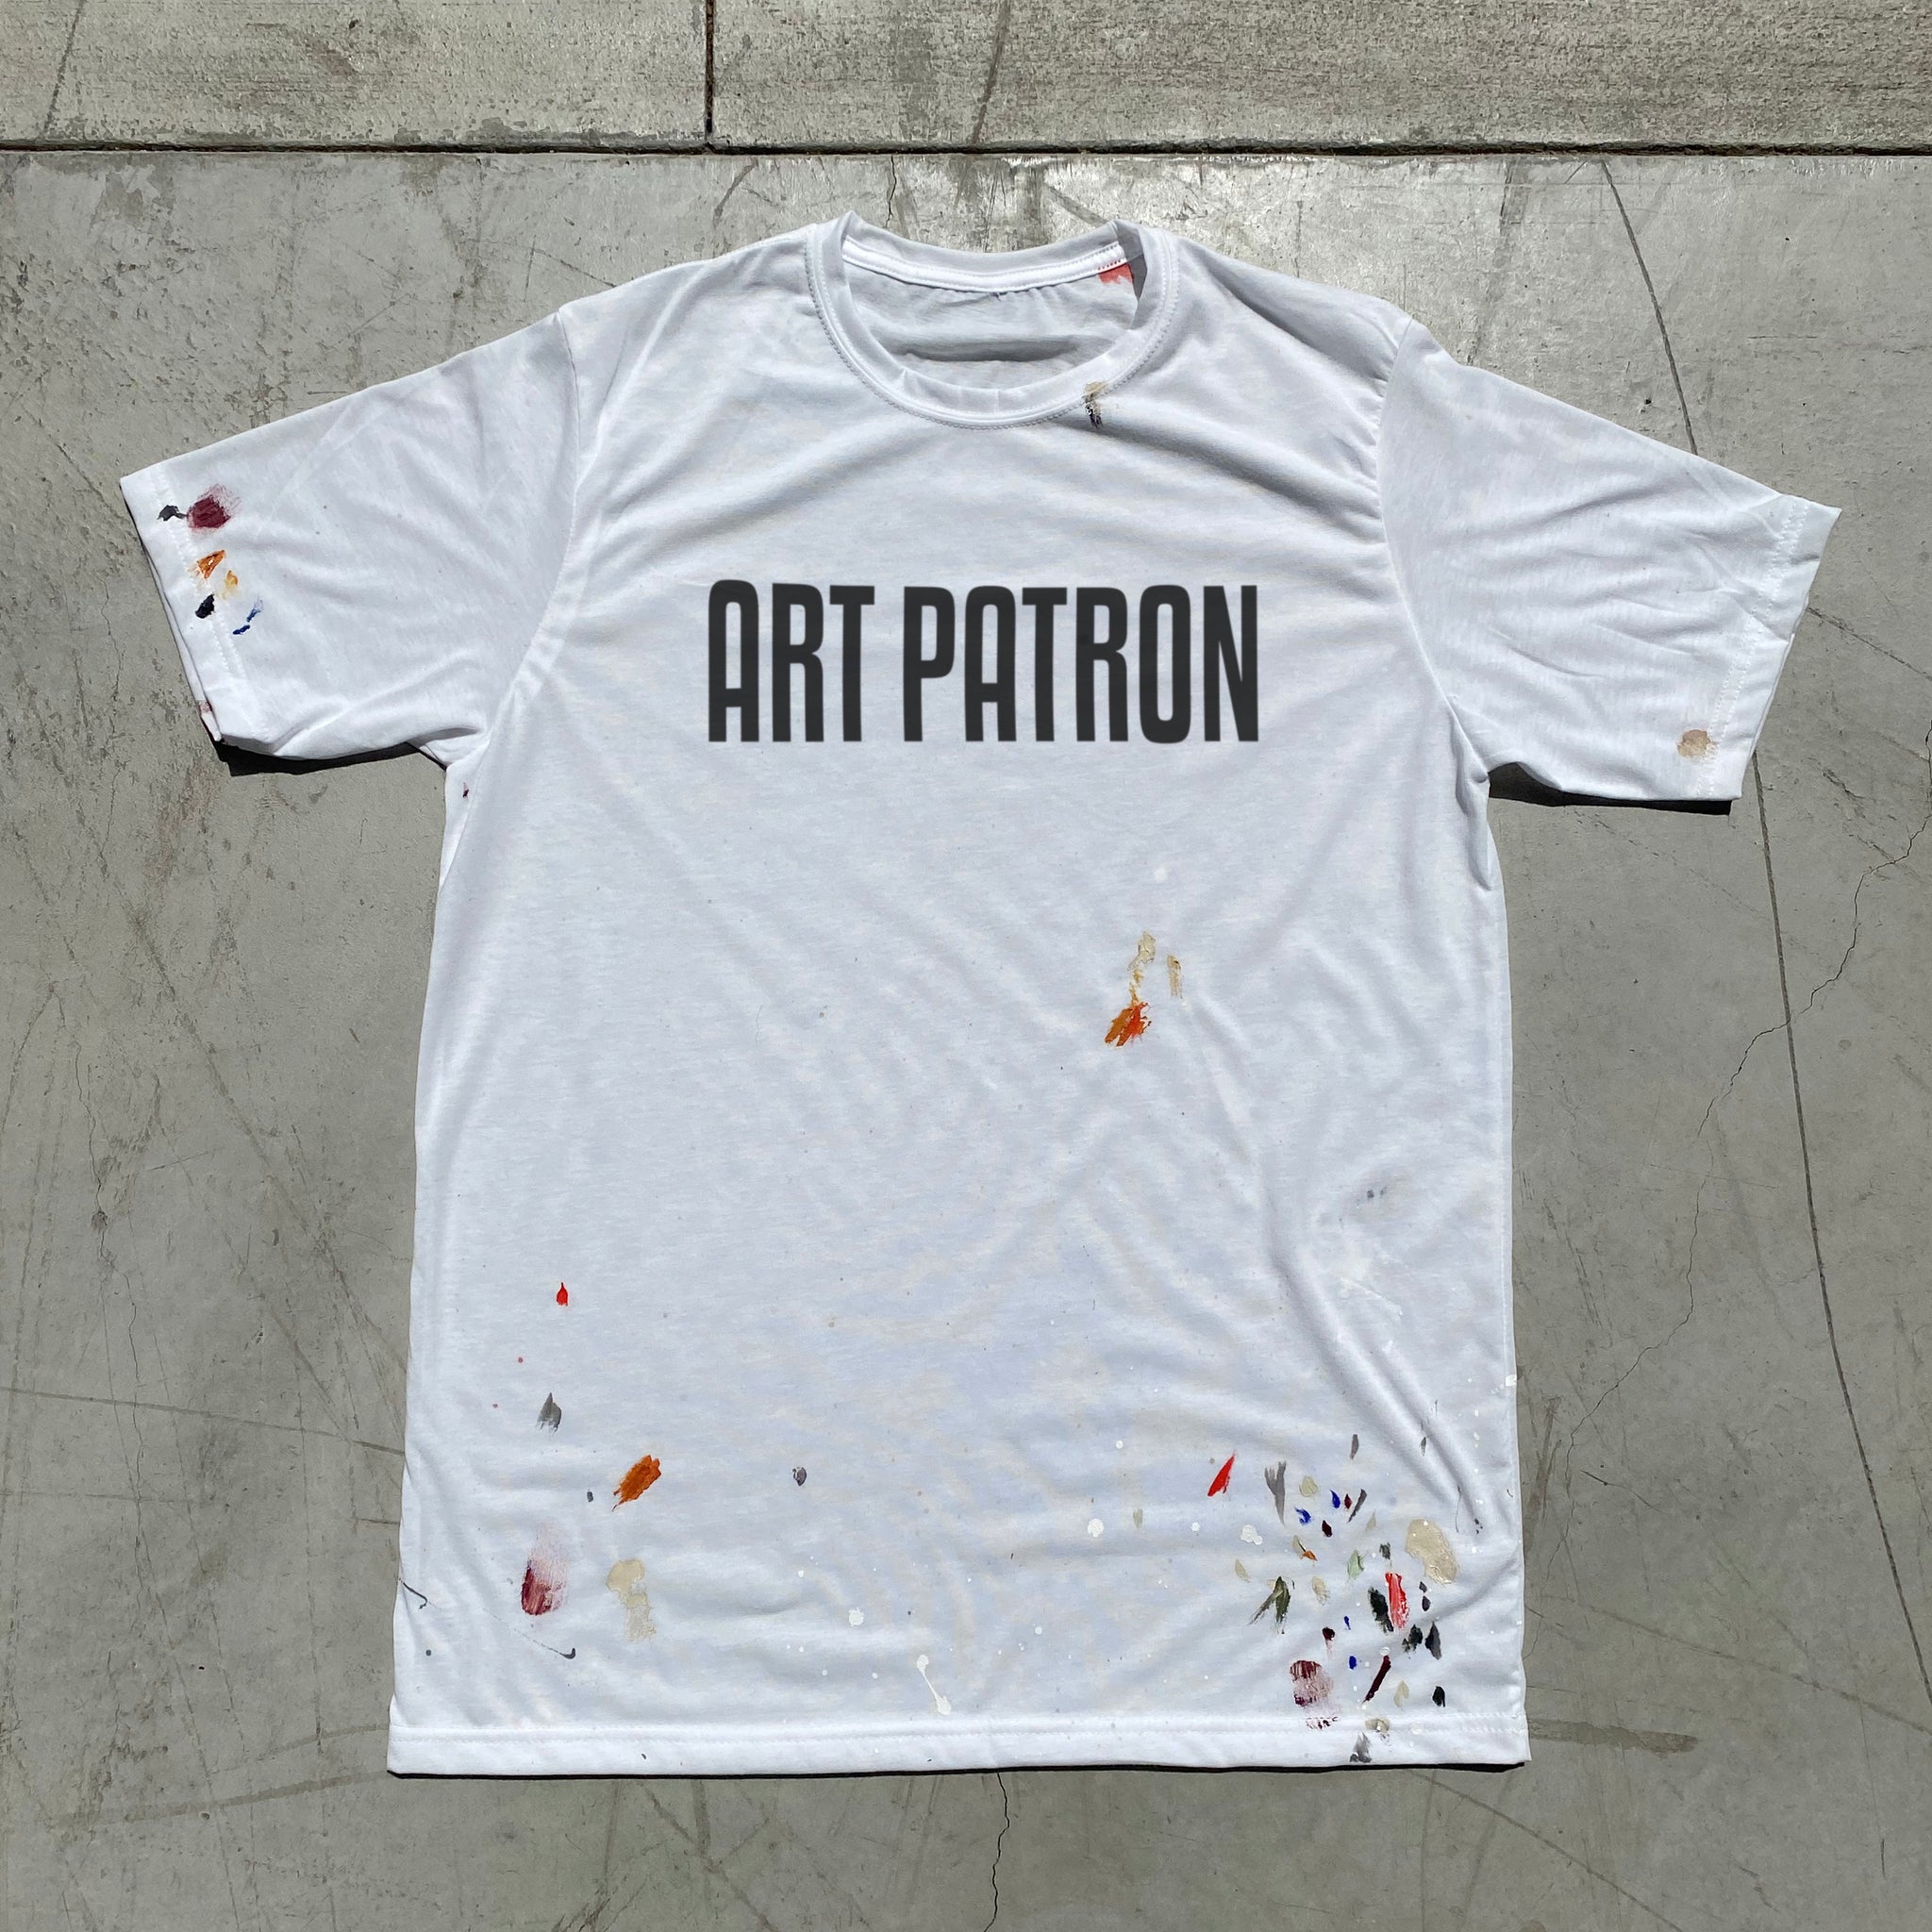 PREORDER - 1/1 ART PATRON LOGO TSHIRT